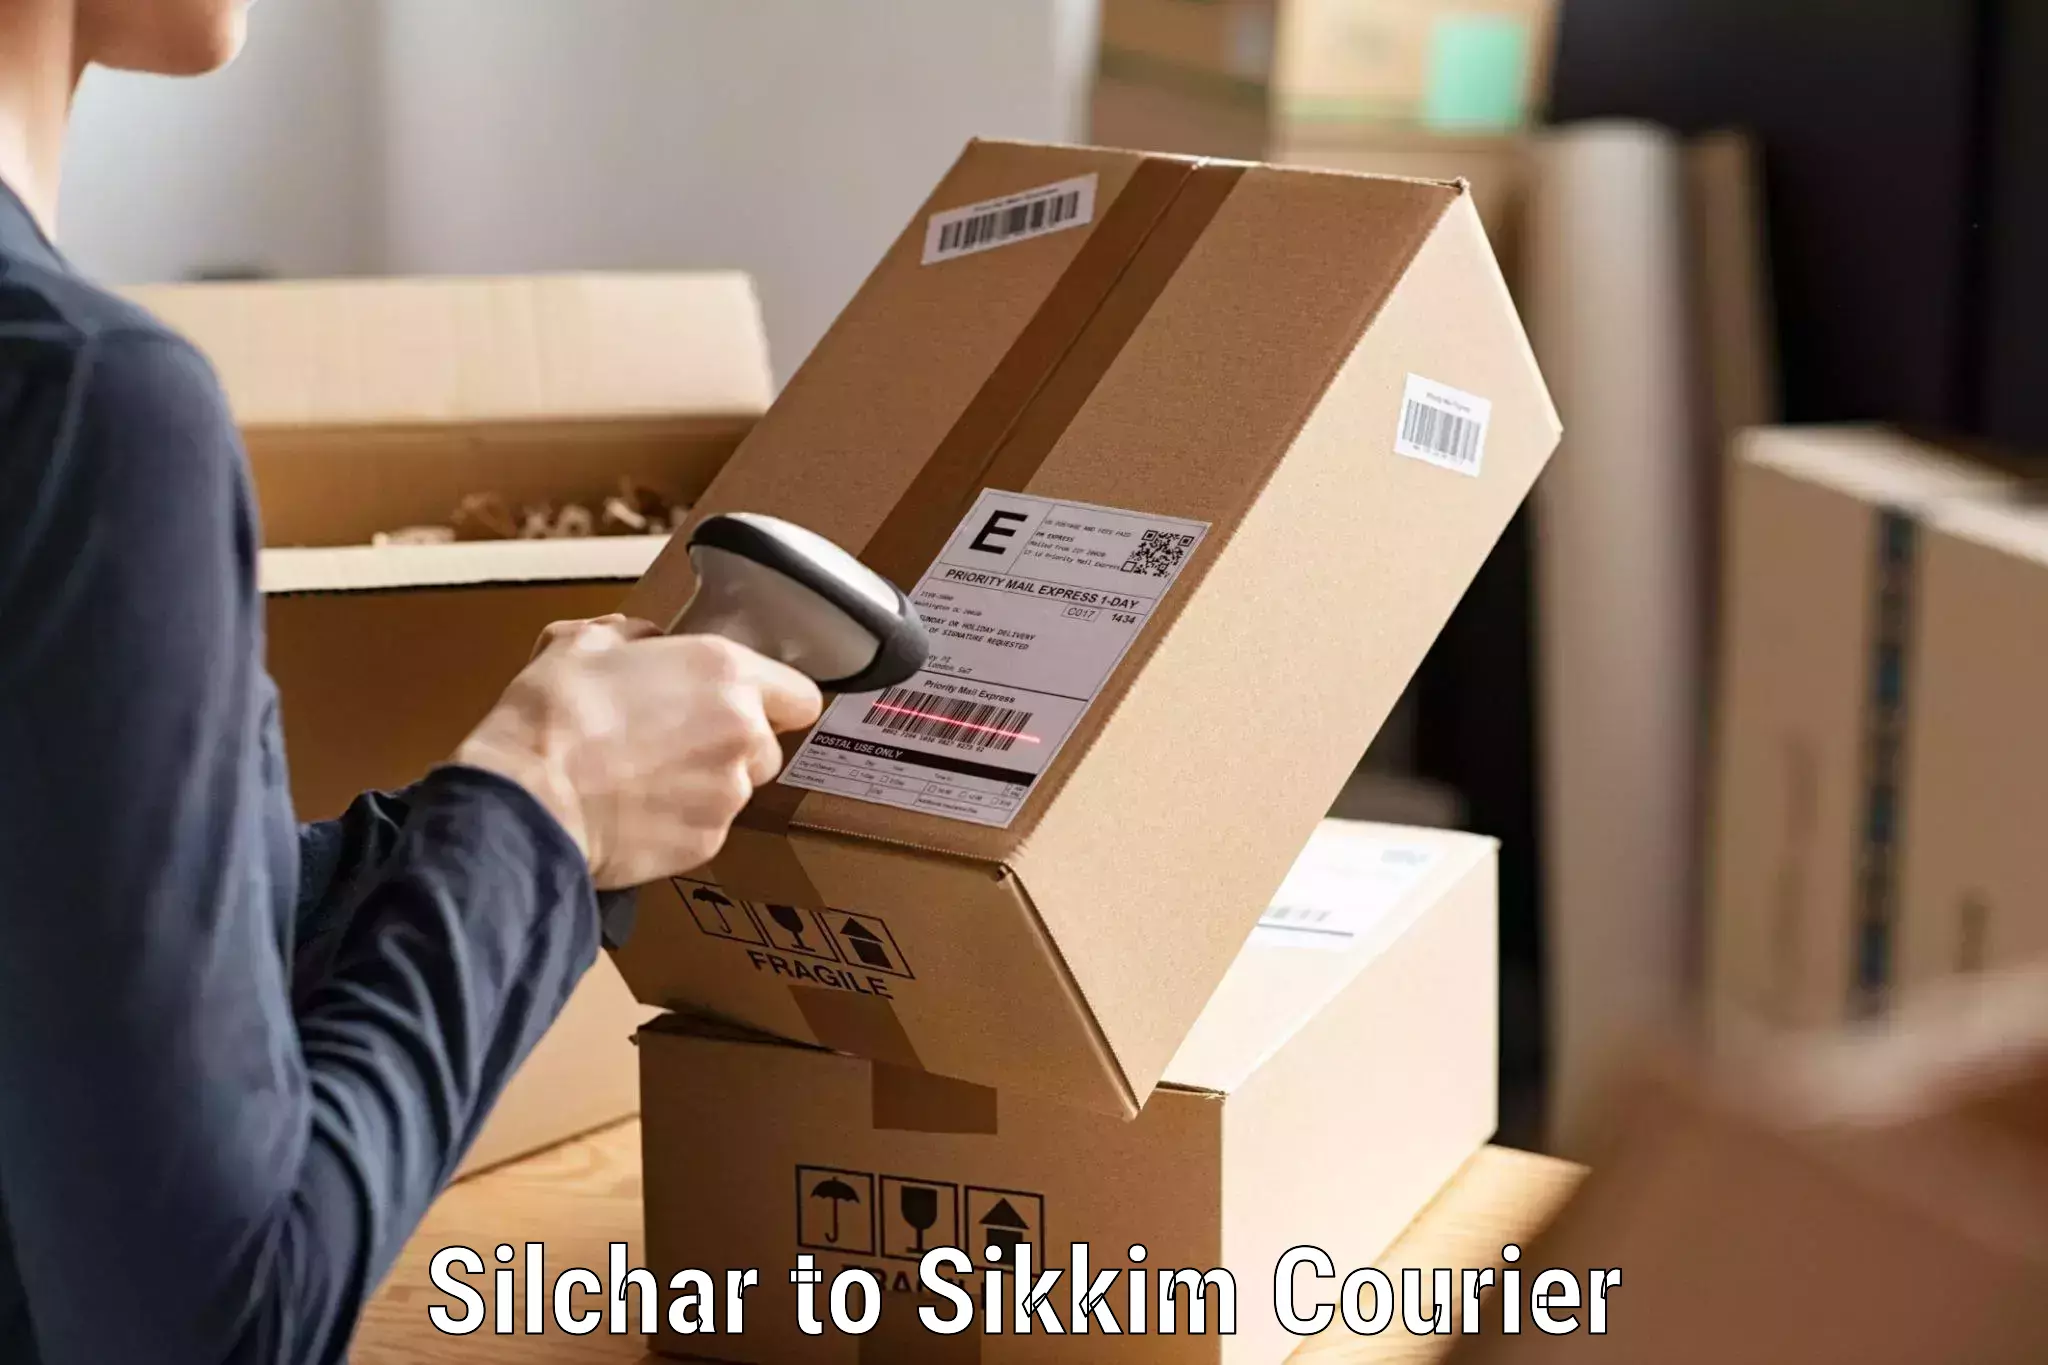 Enhanced tracking features Silchar to Gangtok